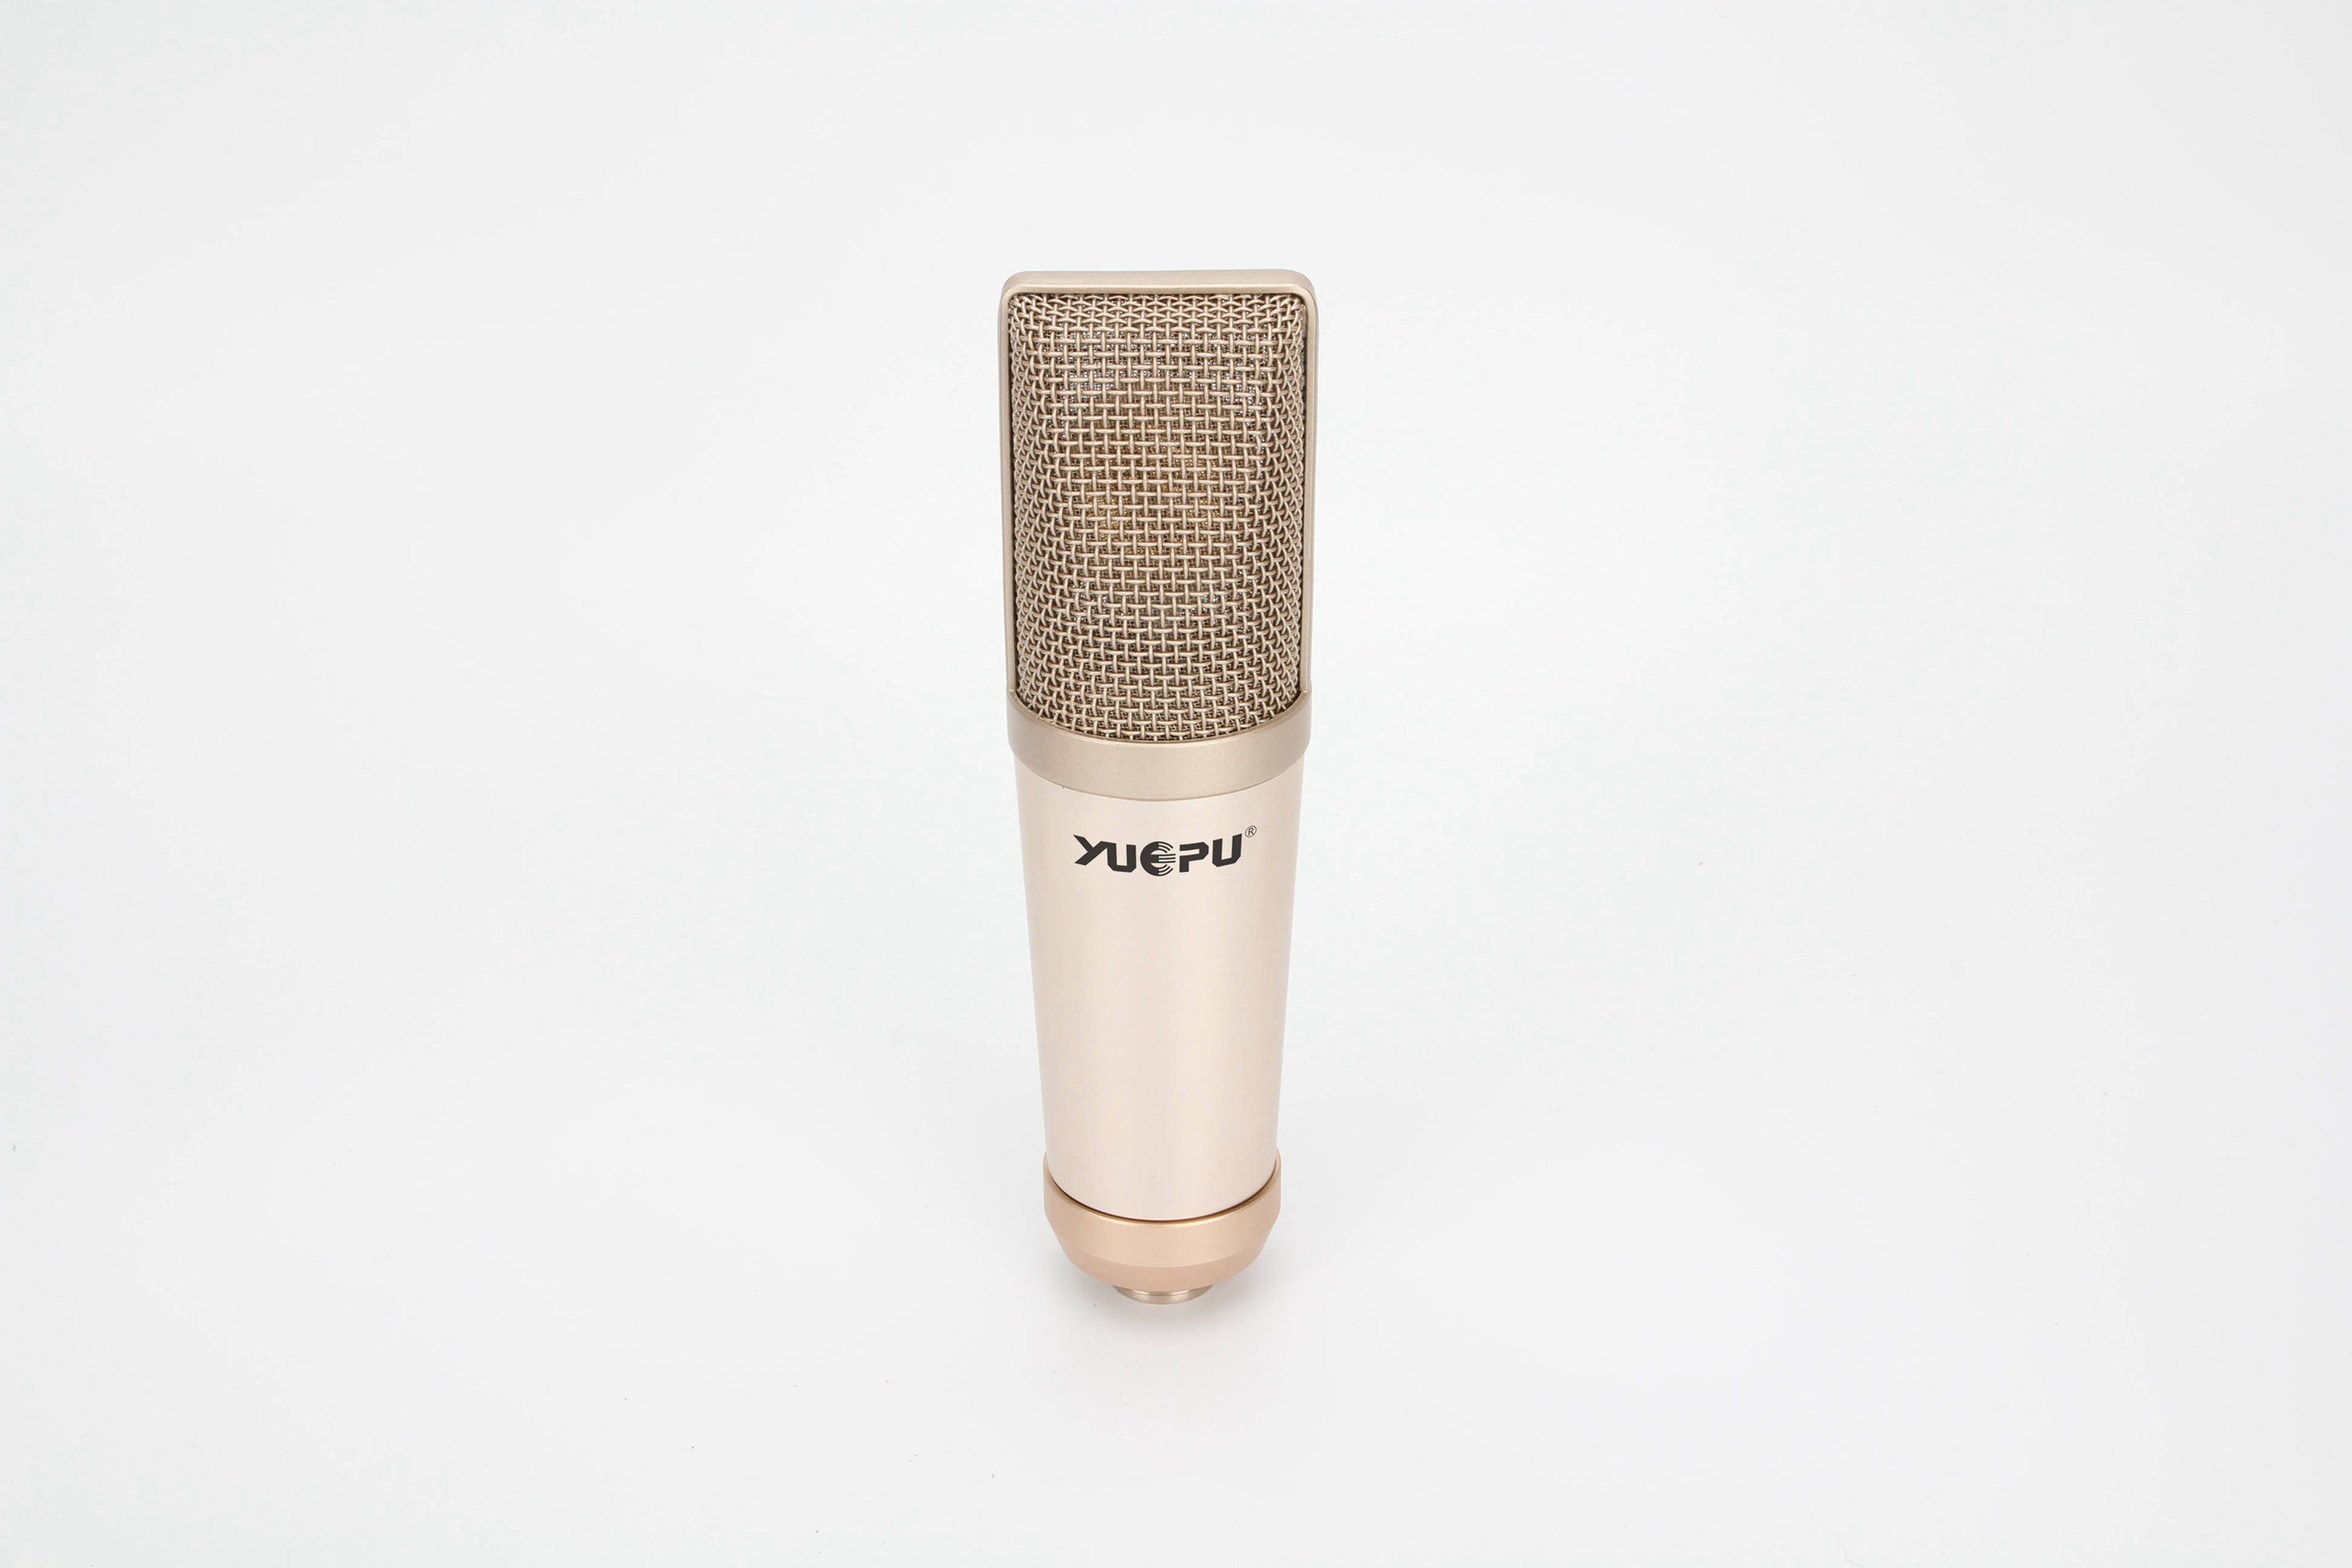 Yp-430A Yuepu Large Diaphragm Recording Microphone